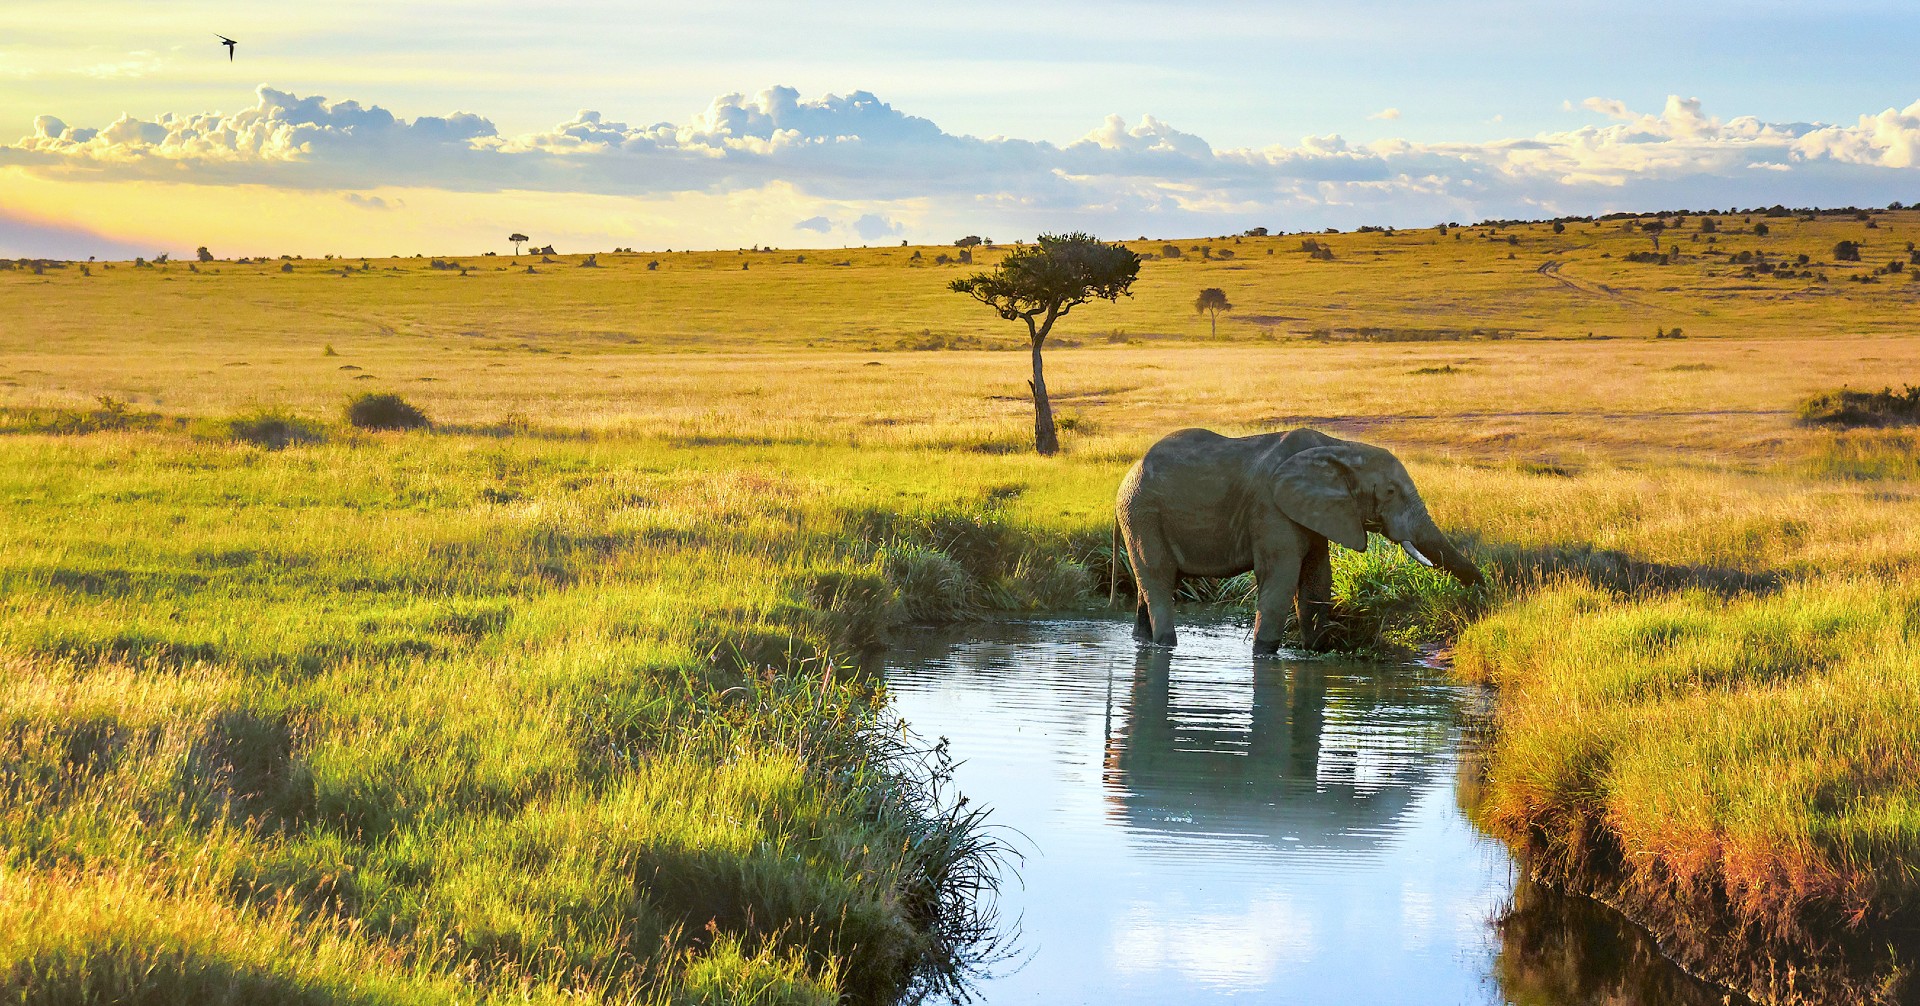 An elephant in a small lake in a savannah in Kenya